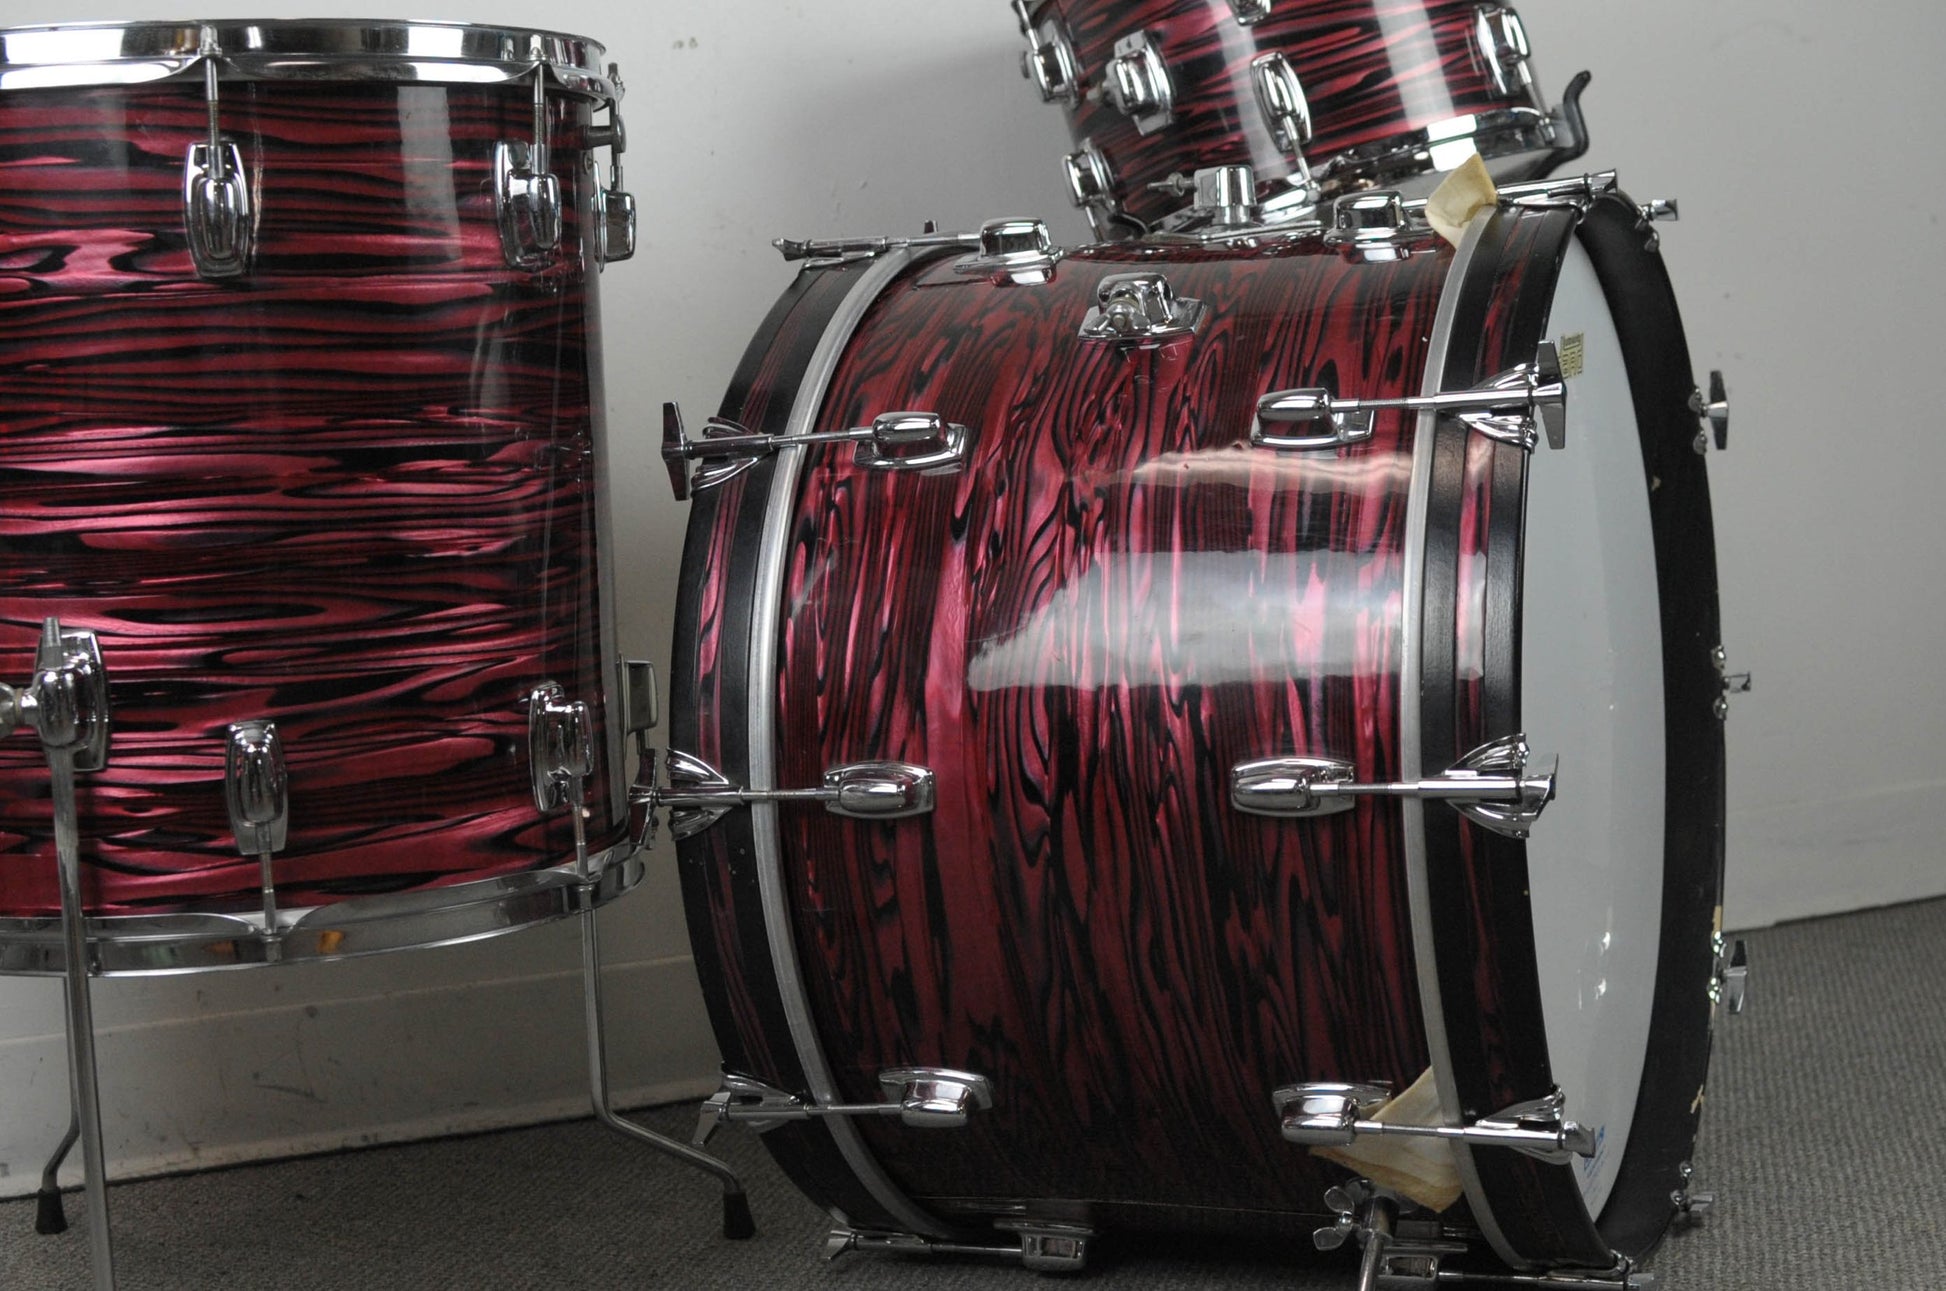 1971 Ludwig Standard Ruby Red Strata Drum Set